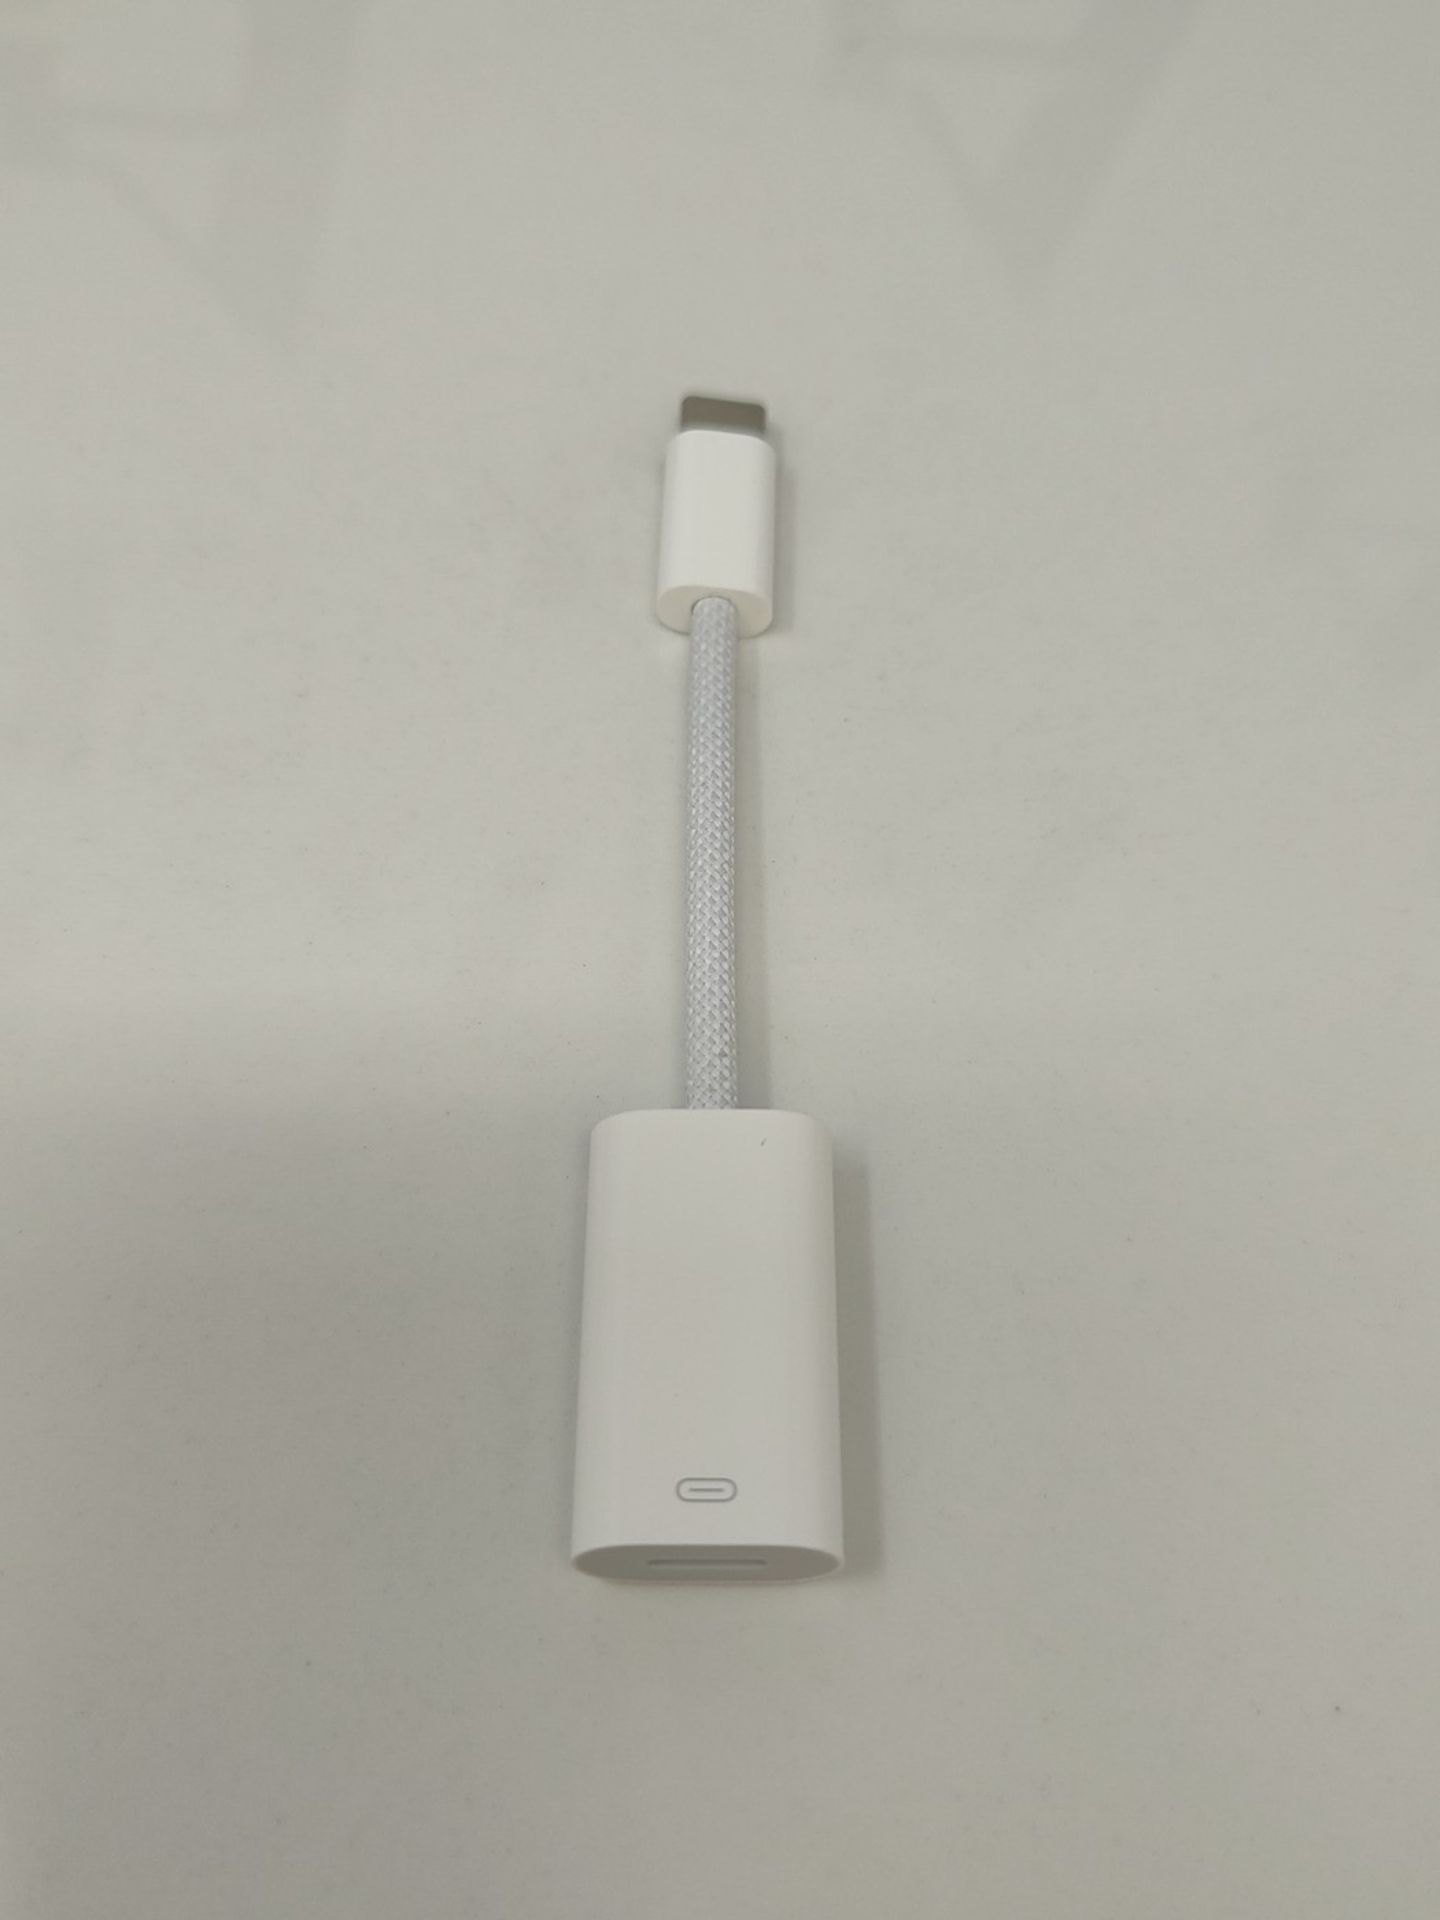 Apple USB-C to Lightning Adapter - Image 3 of 3